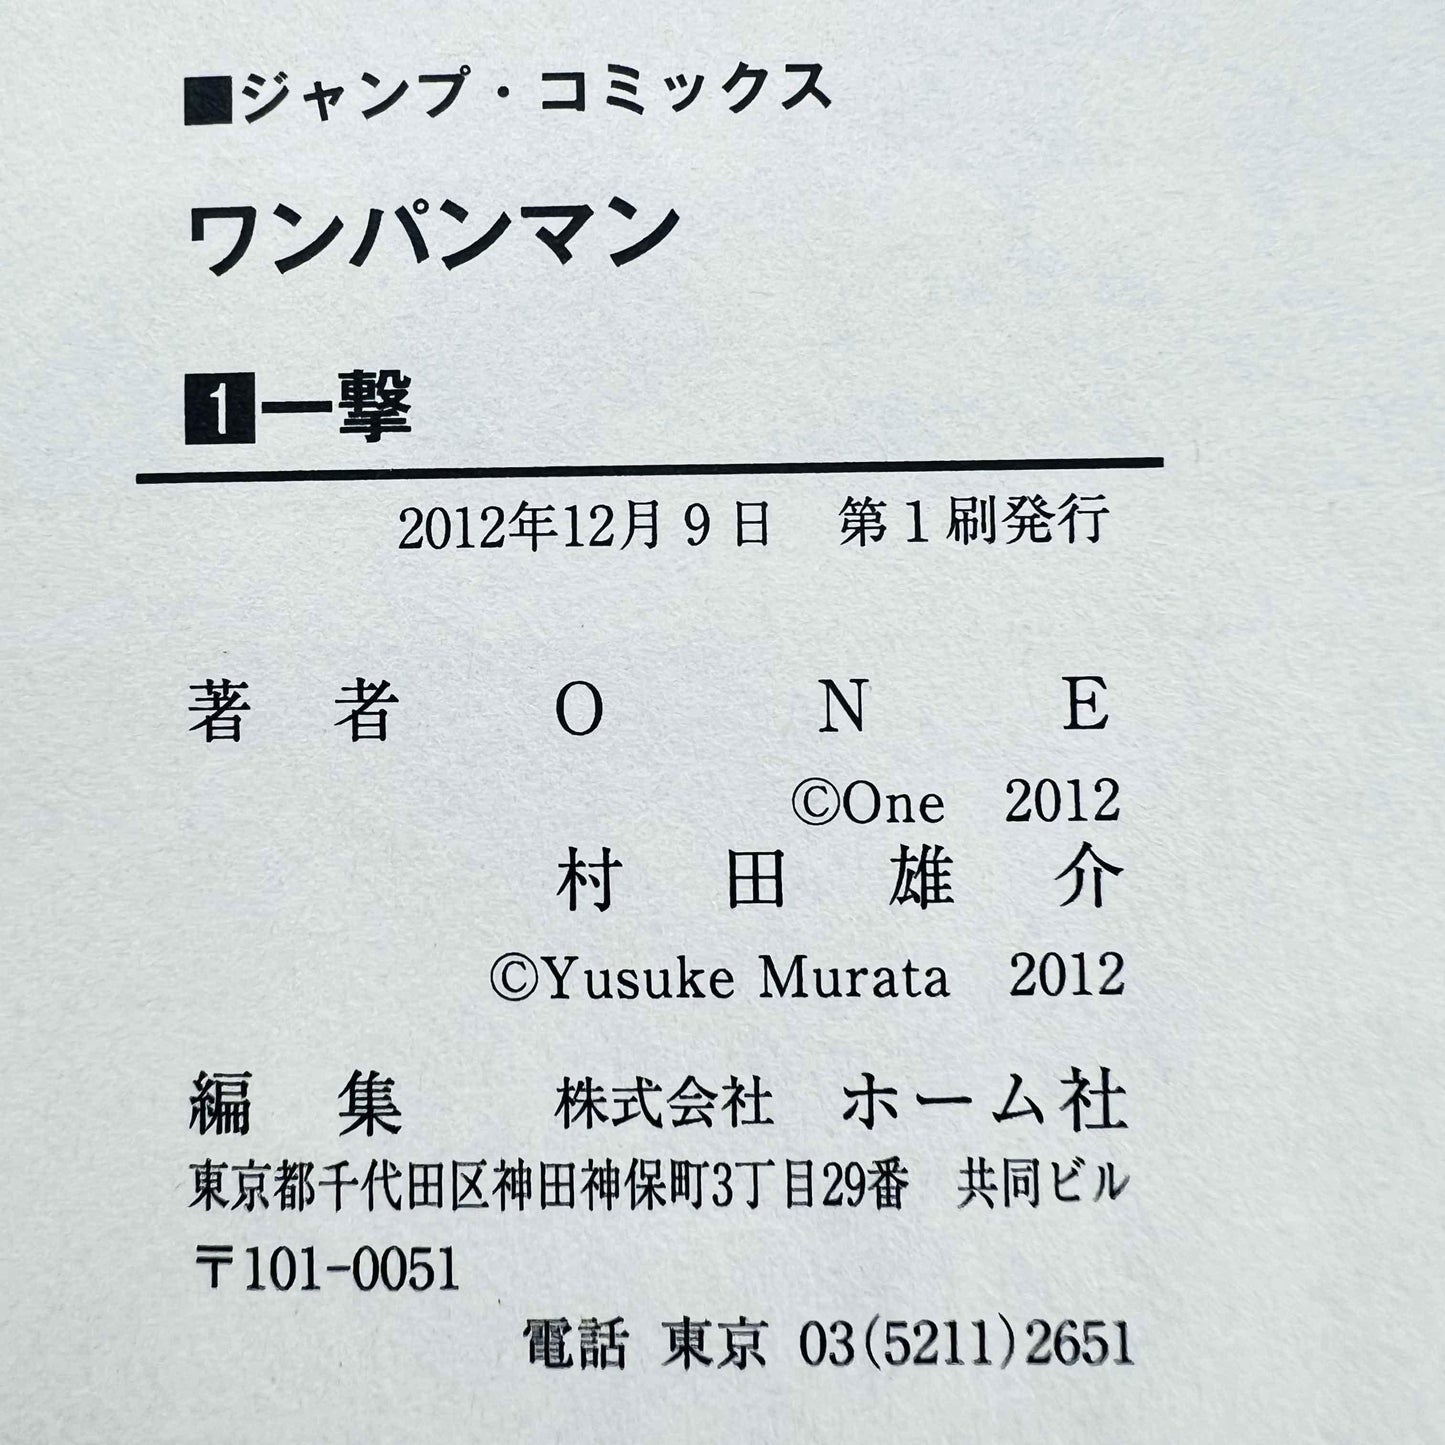 One Punch Man - Volume 01 /w Obi - 1stPrint.net - 1st First Print Edition Manga Store - M-OPM-01-006